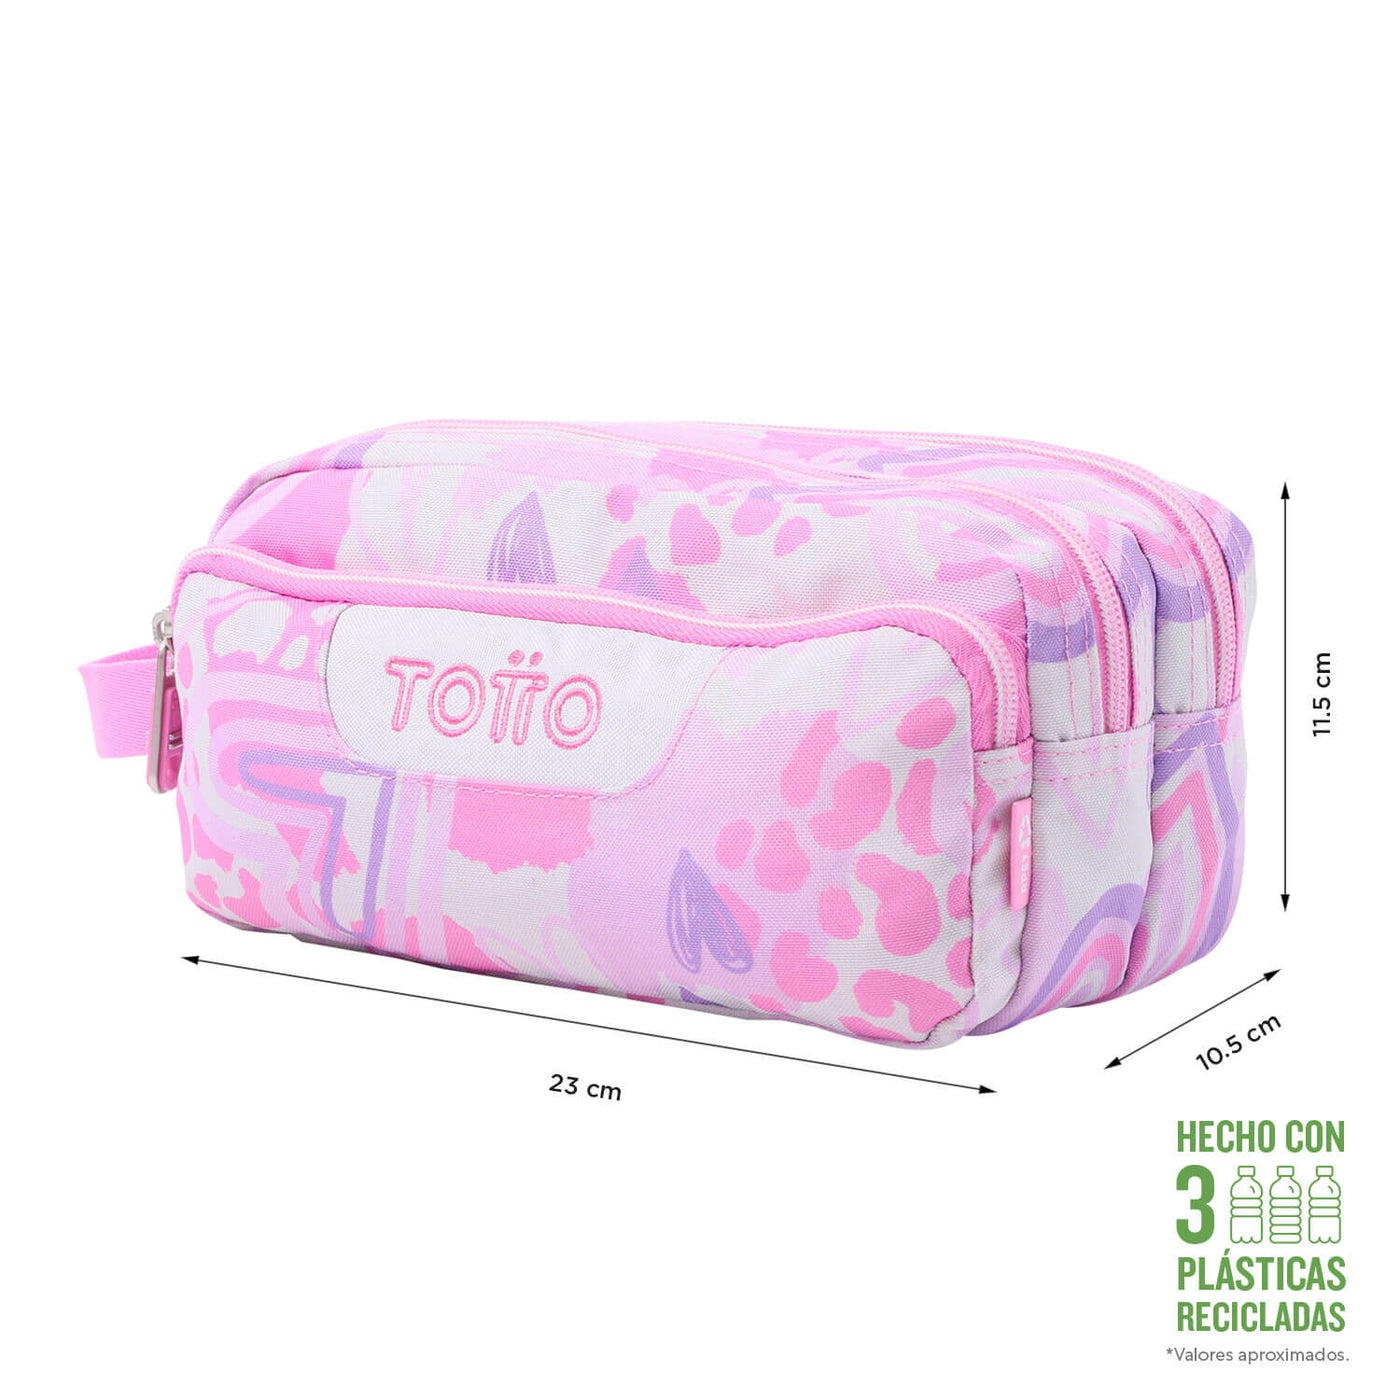 Estuche escolar eco-friendly tres compartimentos rosa Totto Amalia - Agapec